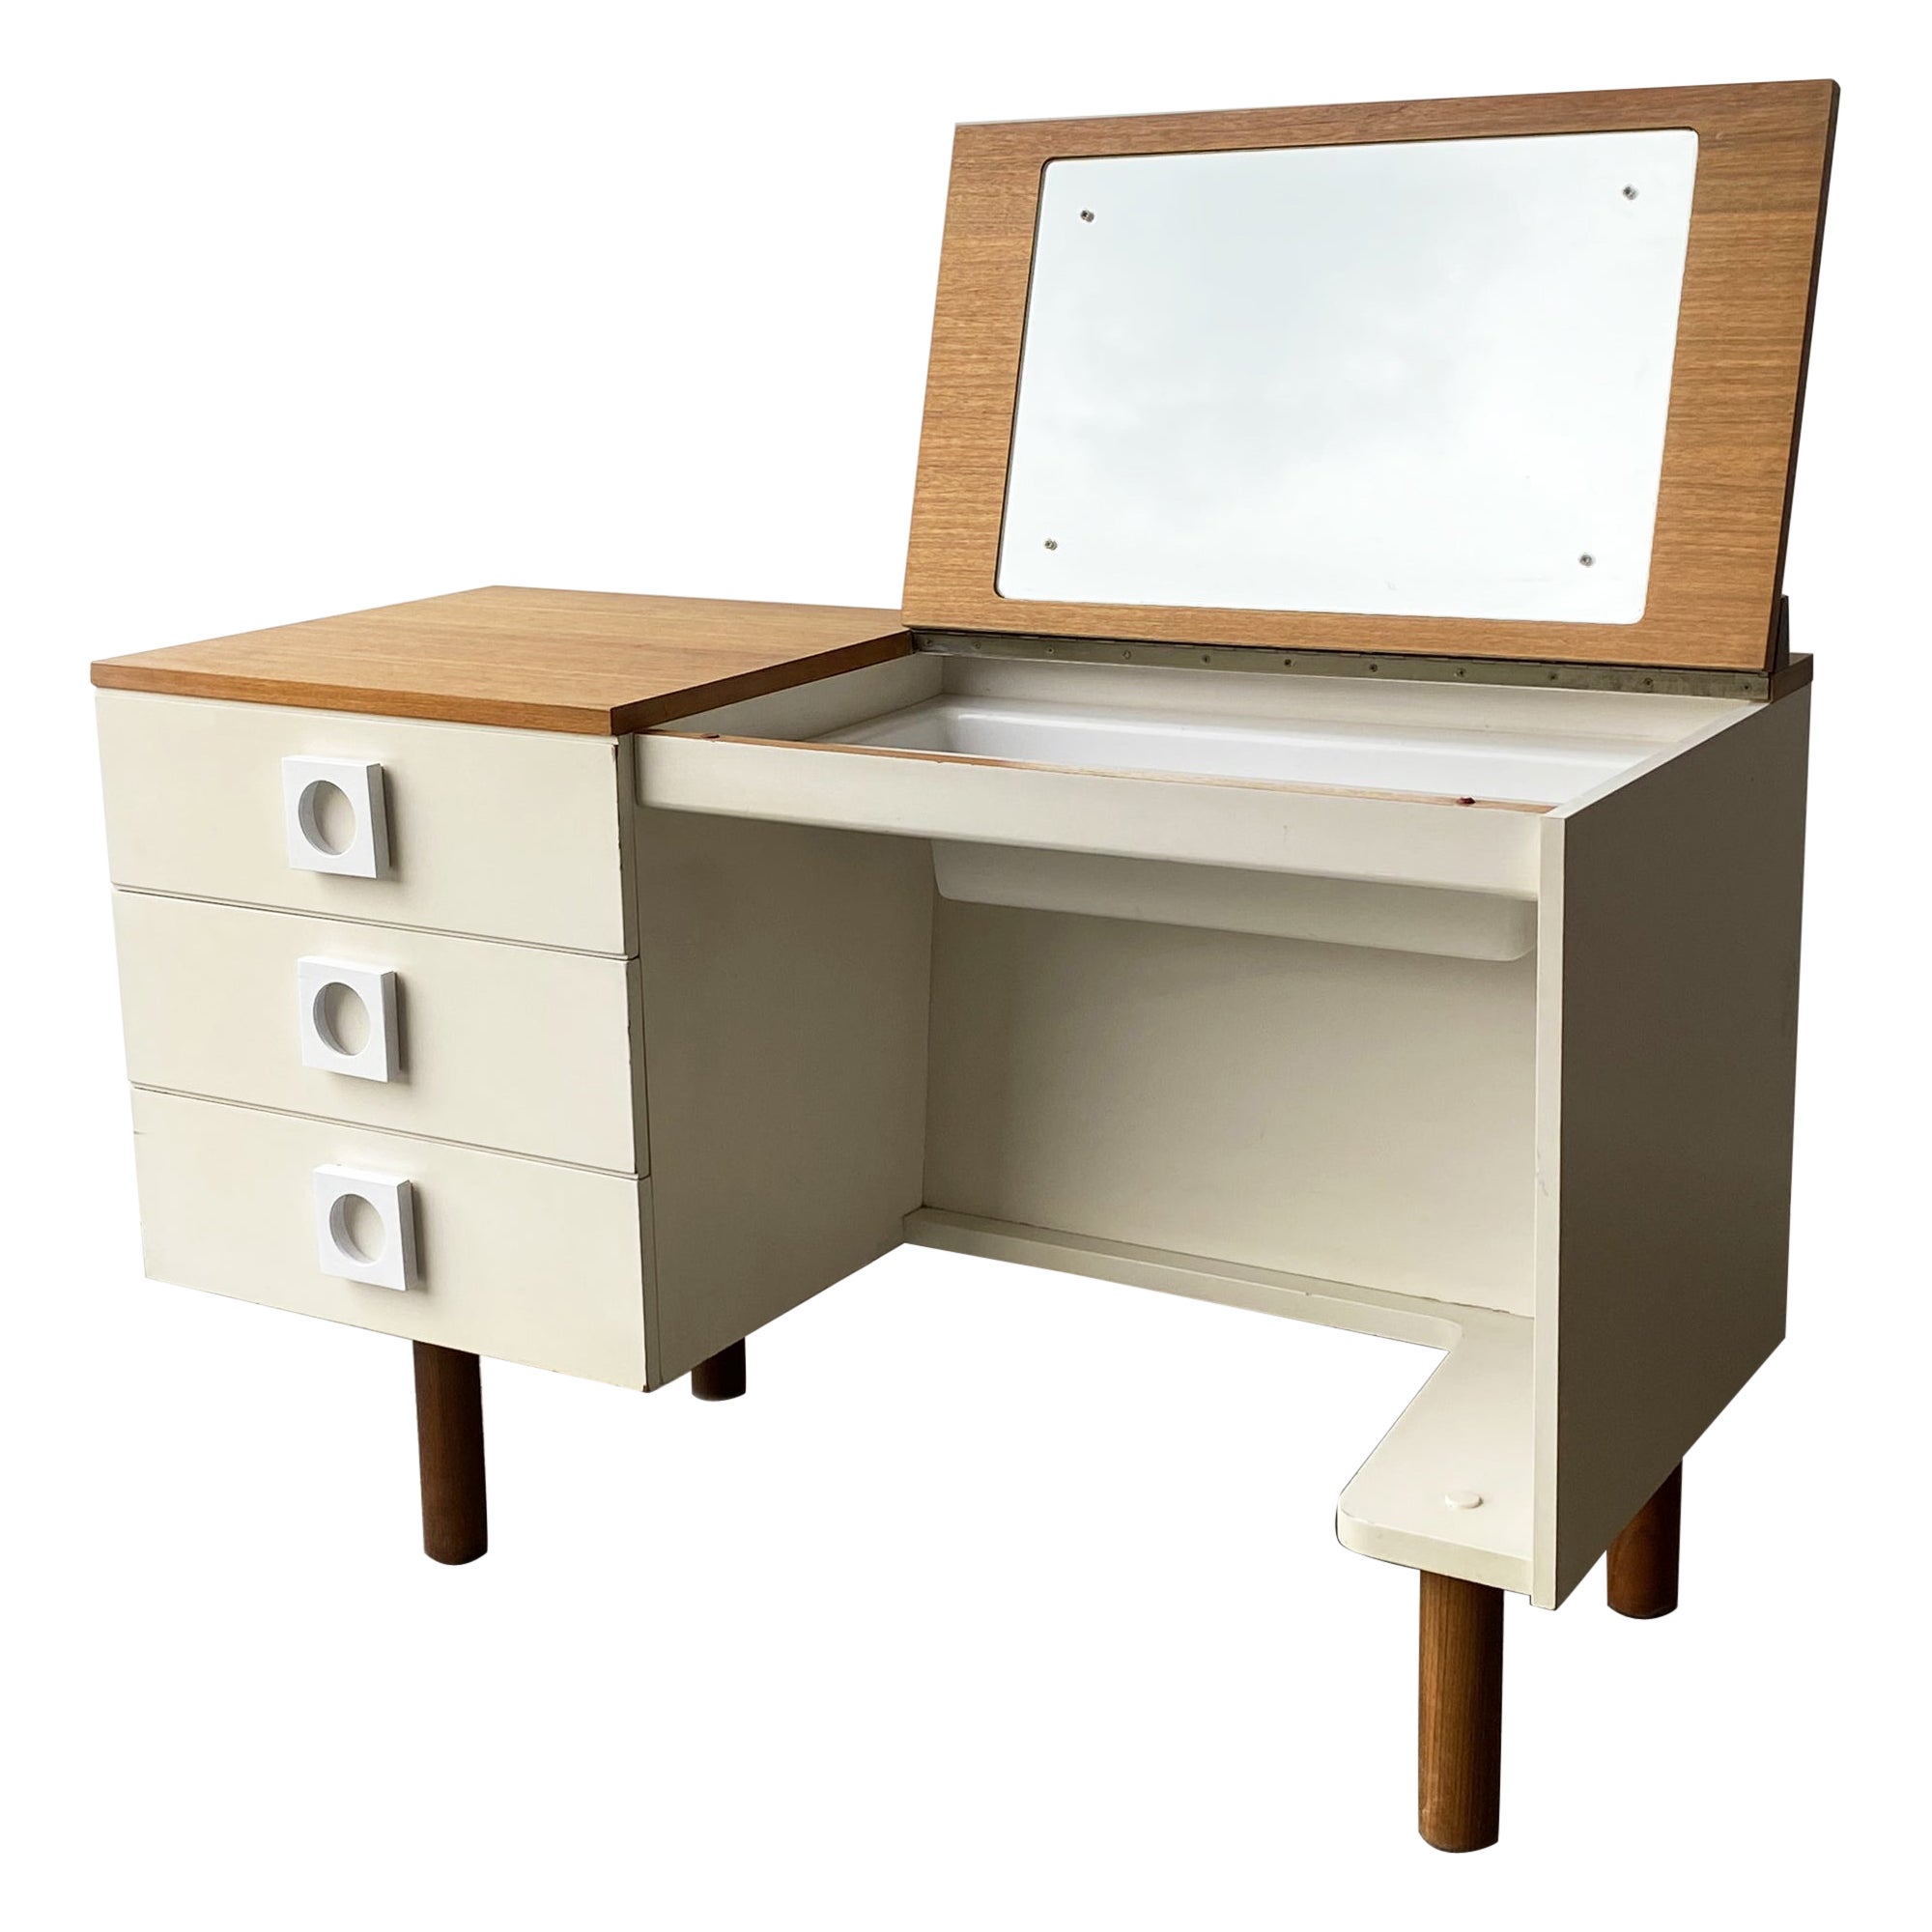 Mid century 1960’s desk/dressing table by Uniflex For Sale